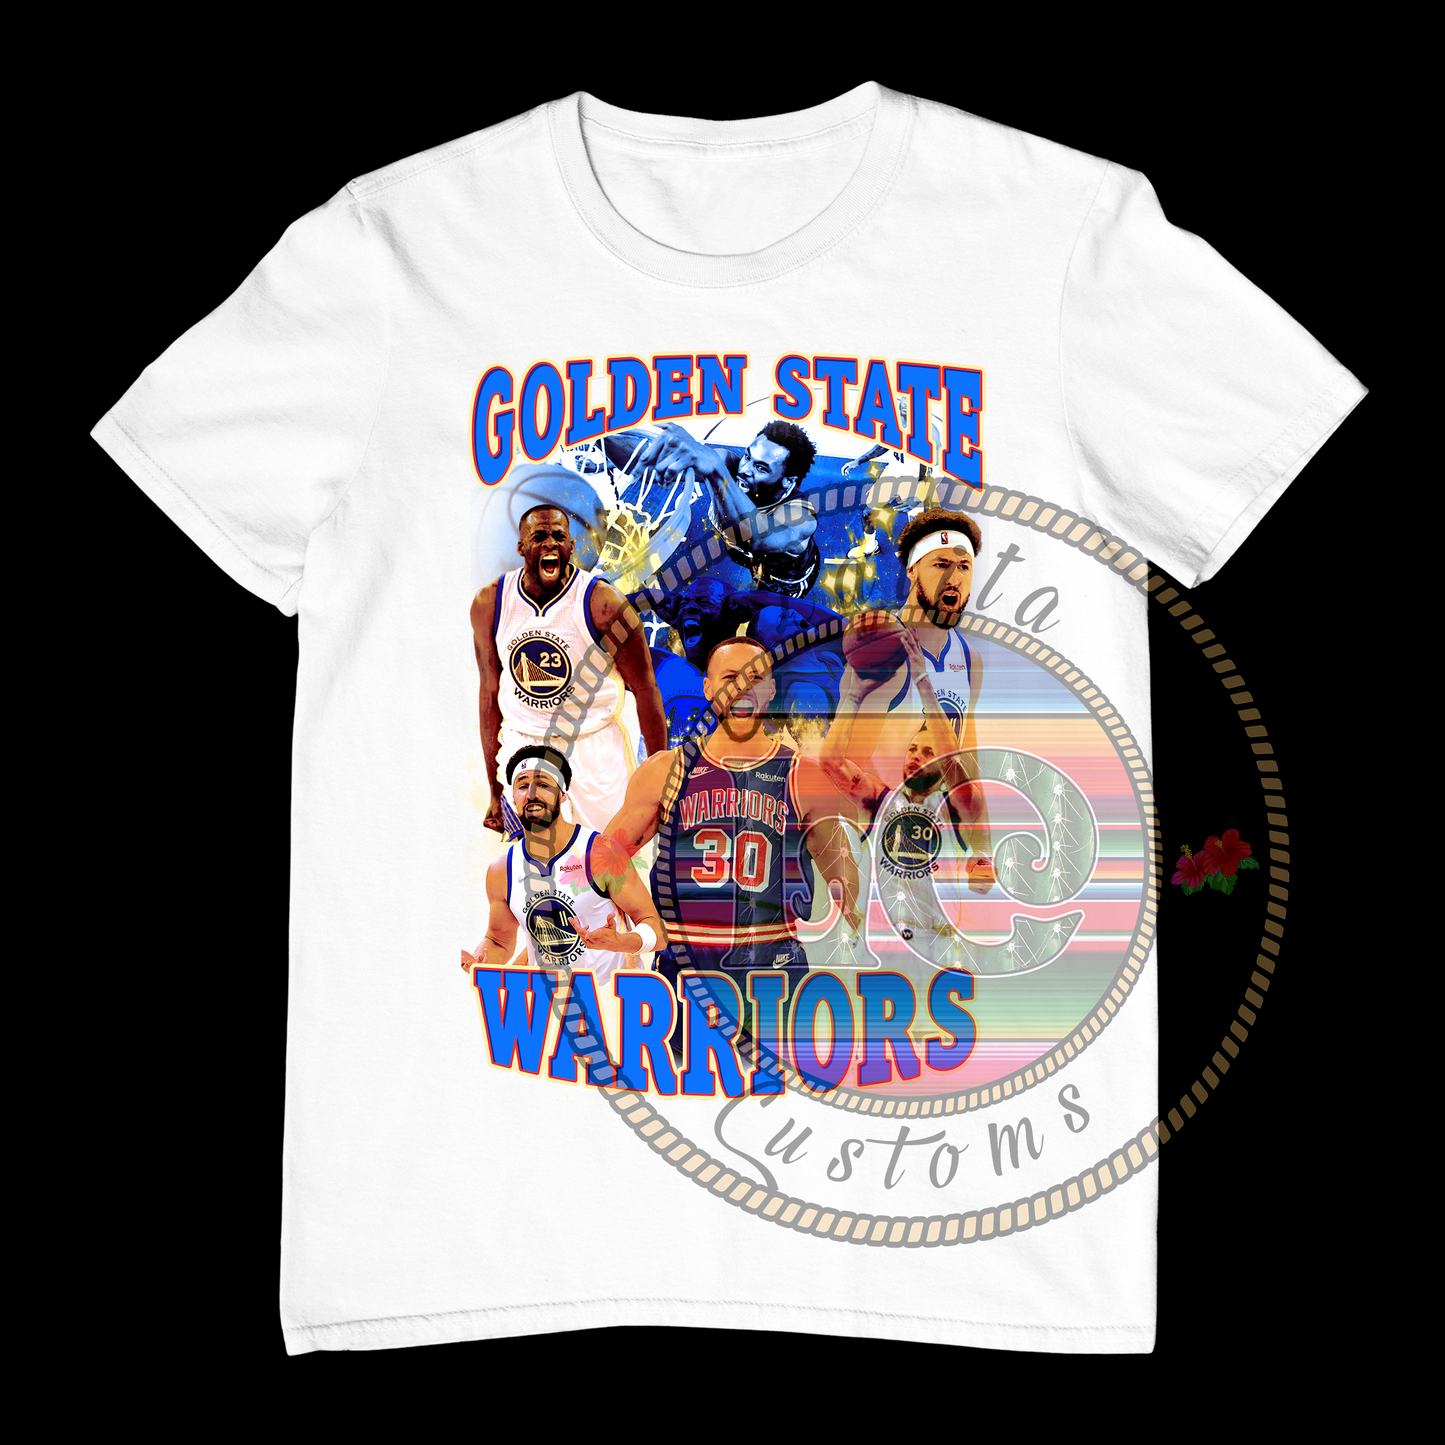 Golden State Warriors "Same Squad" Bootleg Rap Tee